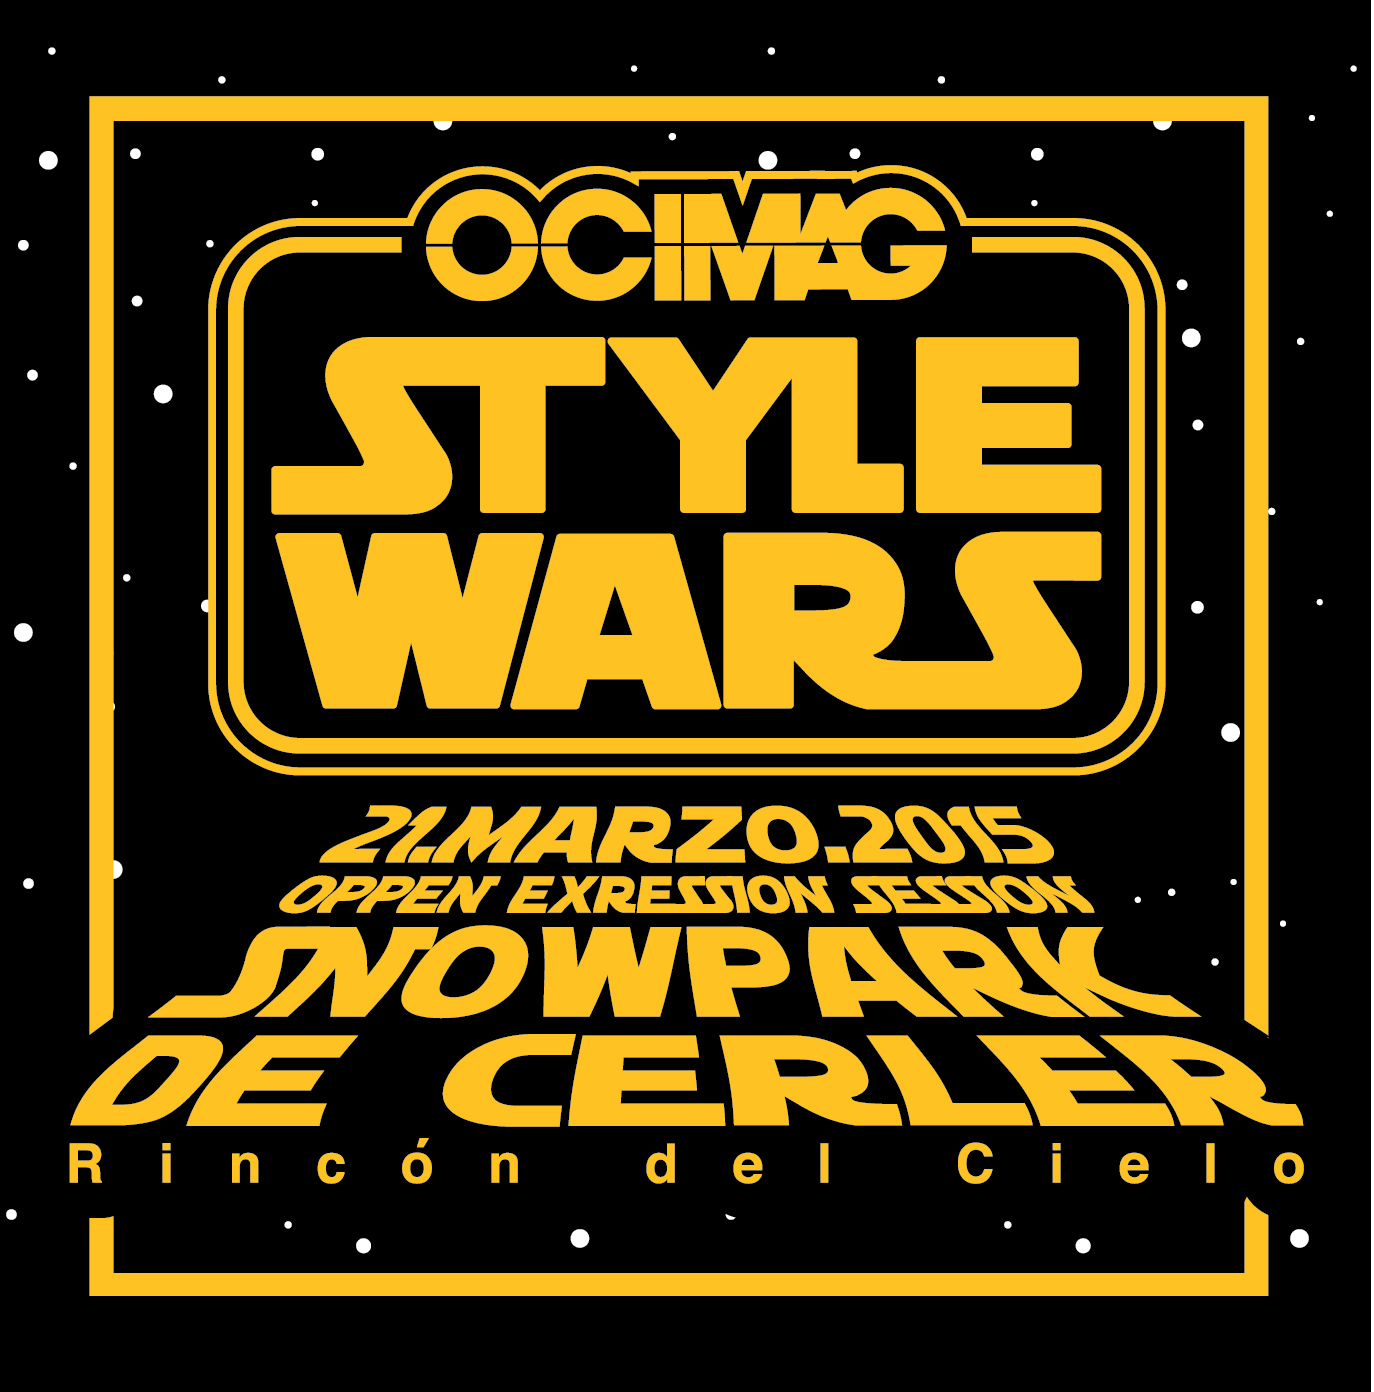  Crónica Ocimag Style Wars de Cerler Aramón